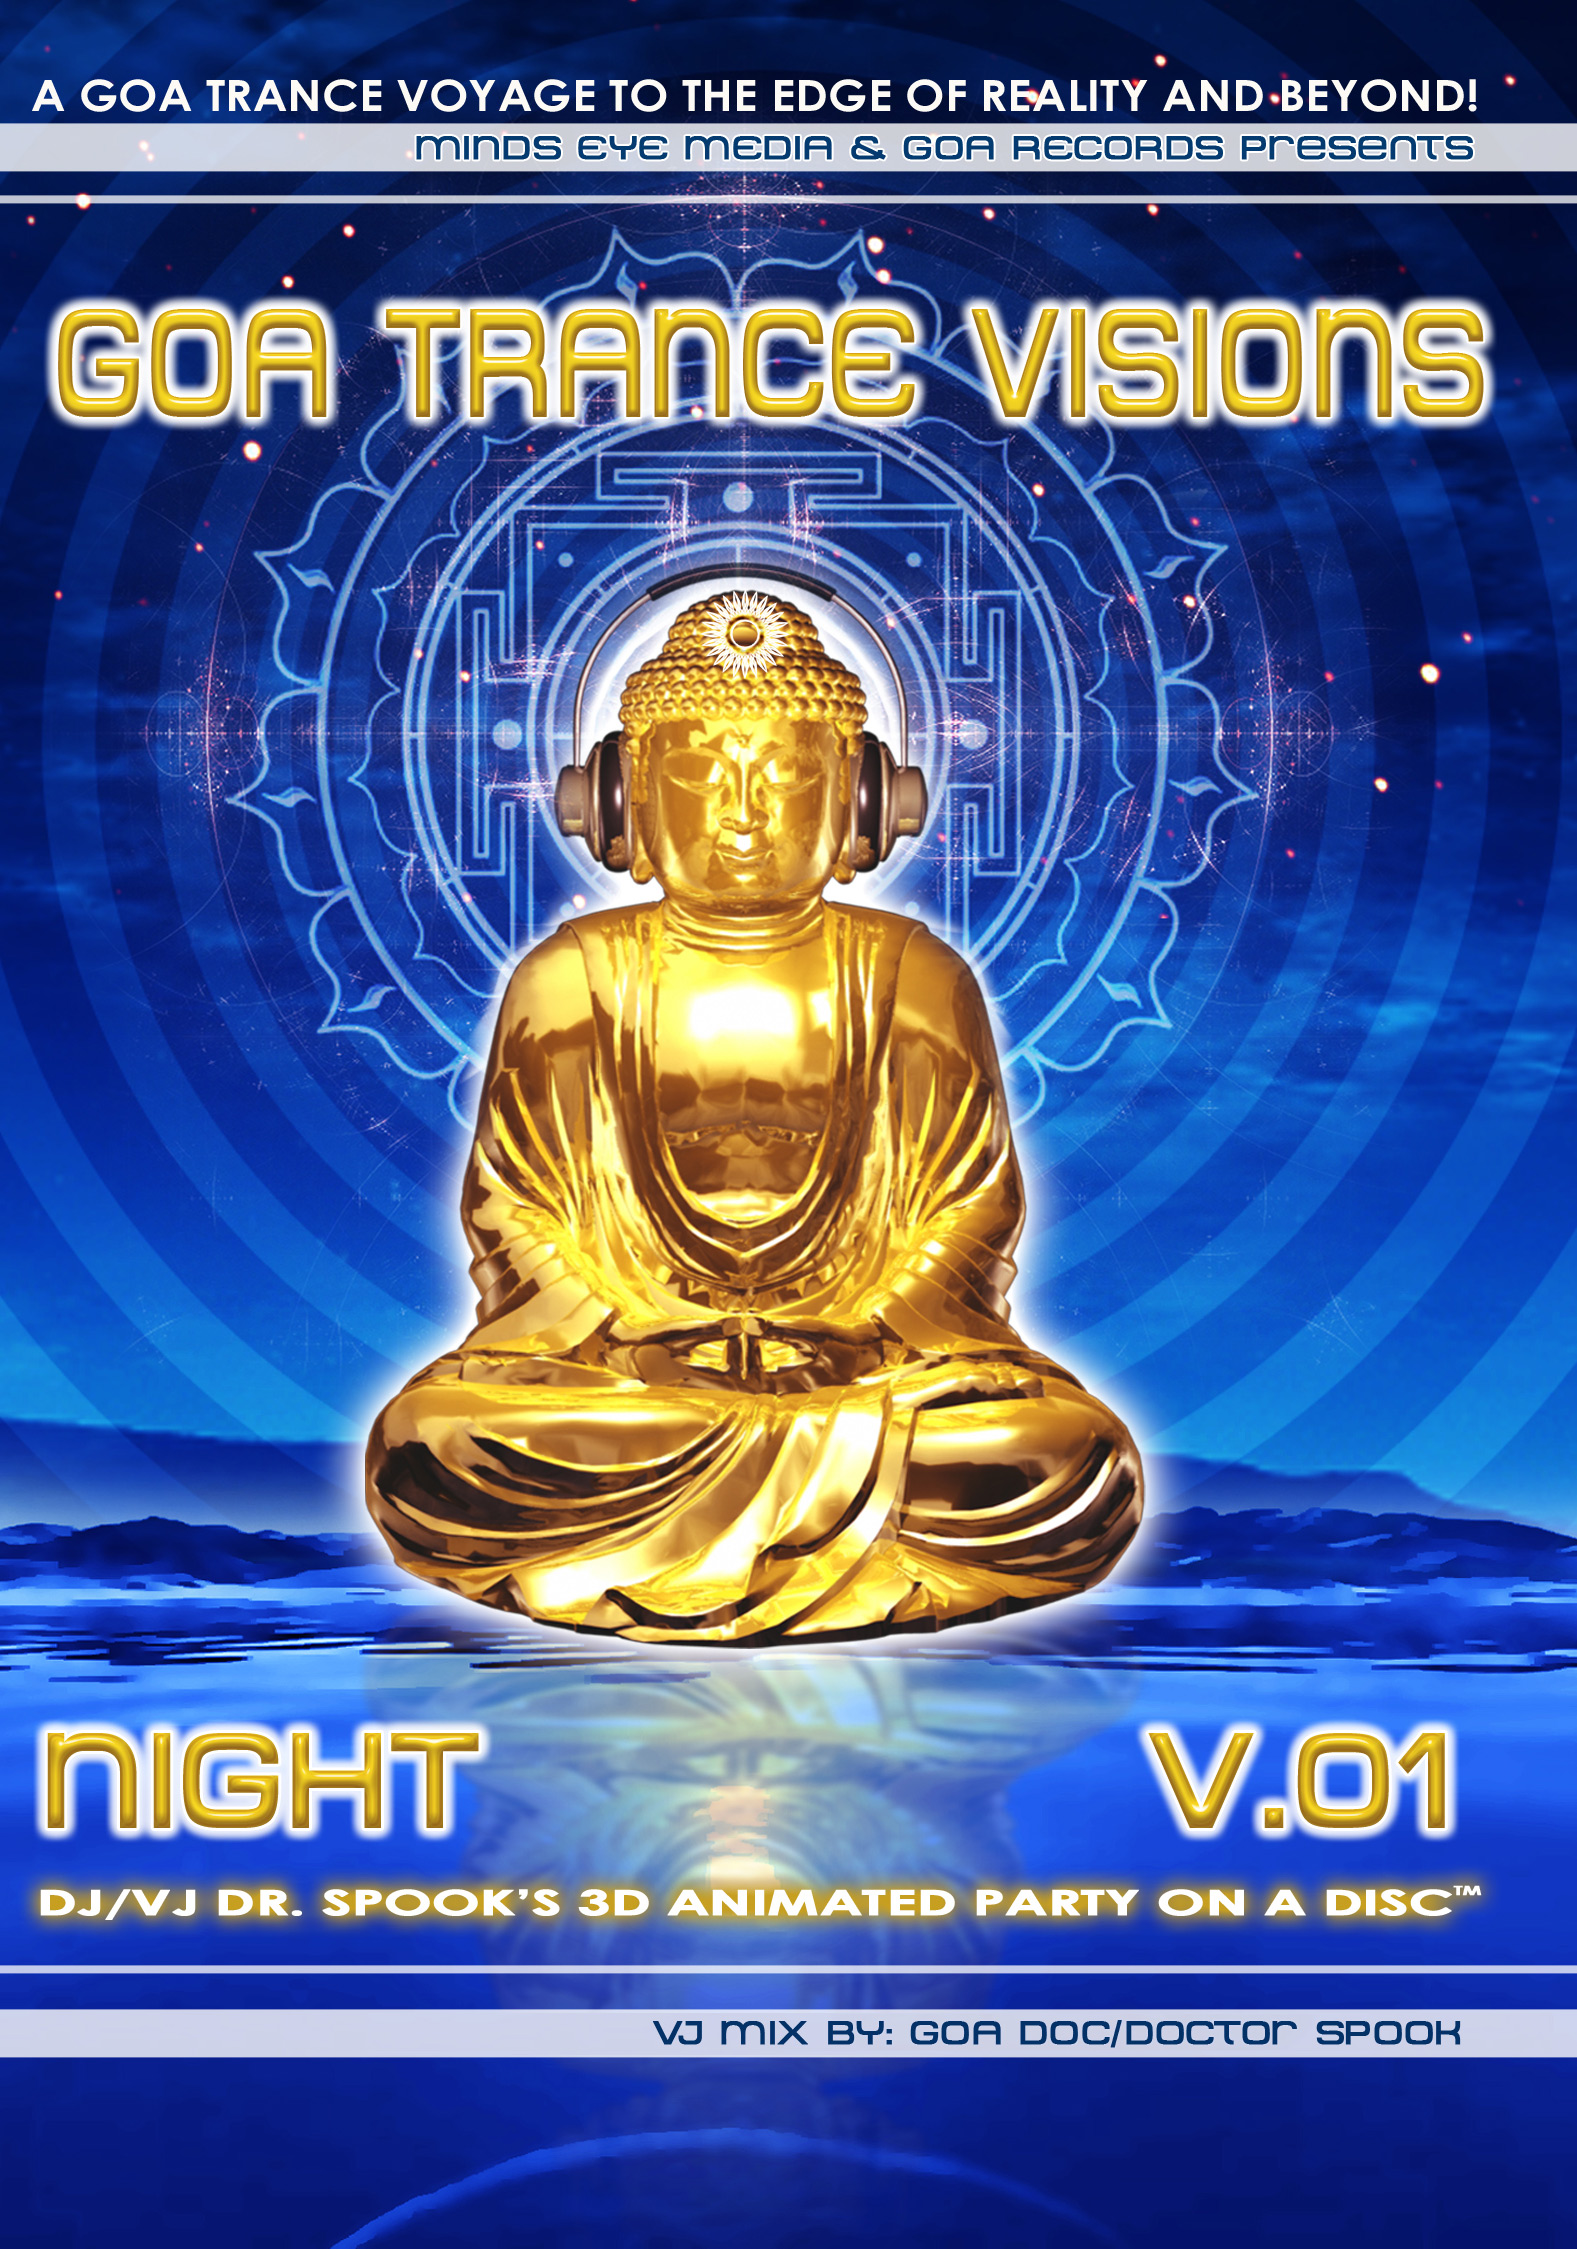 Goa Trance Visions volume 1 Night by VJ / DJ Goa Doc Aka Dr. Spook